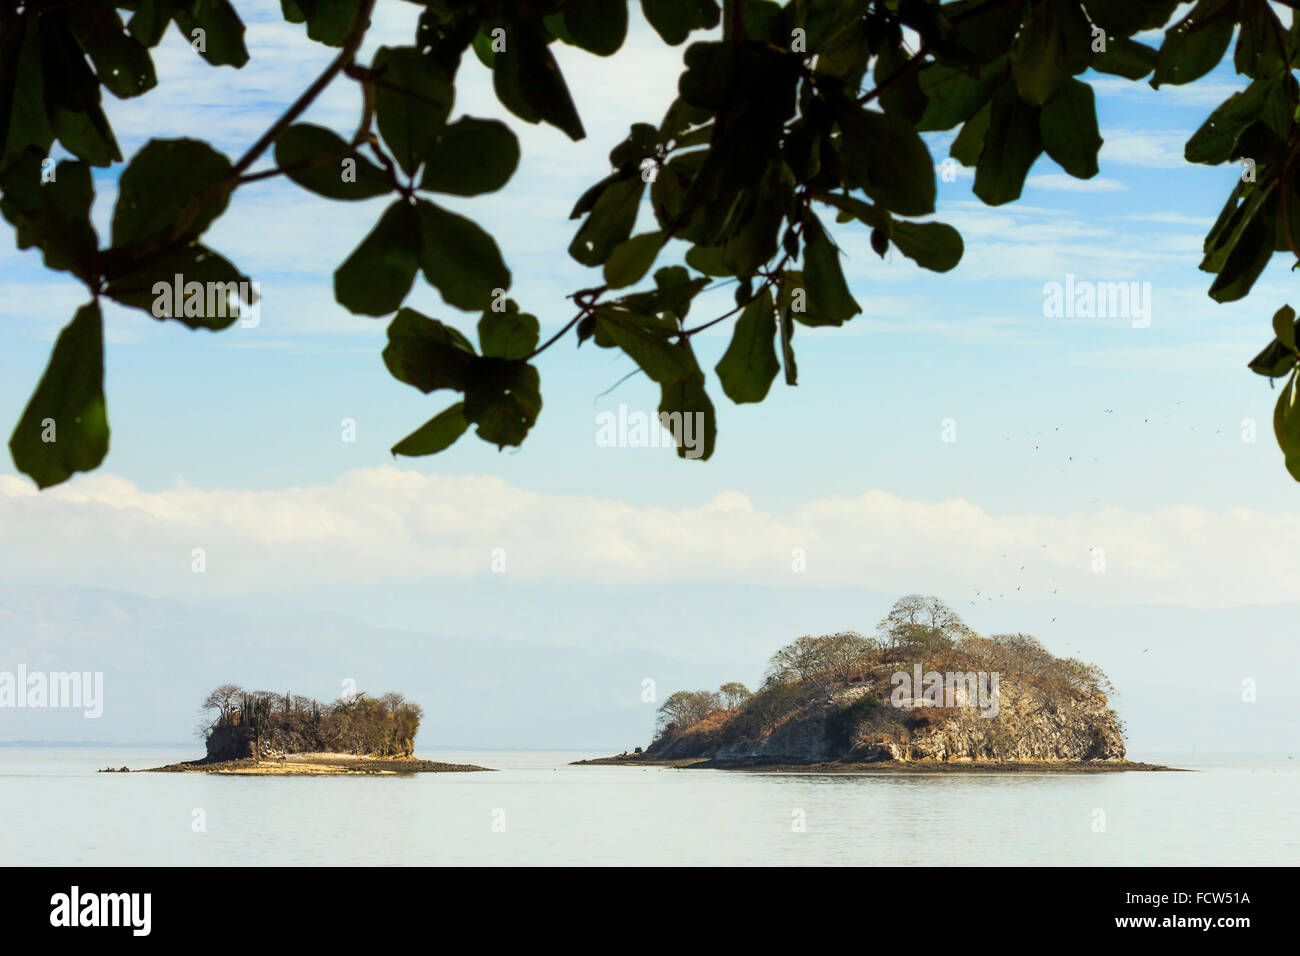 Pajaros Isola, noto per la sua brulicante avifauna, sul Golfo di Nicoya costa occidentale; Playa Pajaros, Nicoya peninsula, Costa Rica Foto Stock